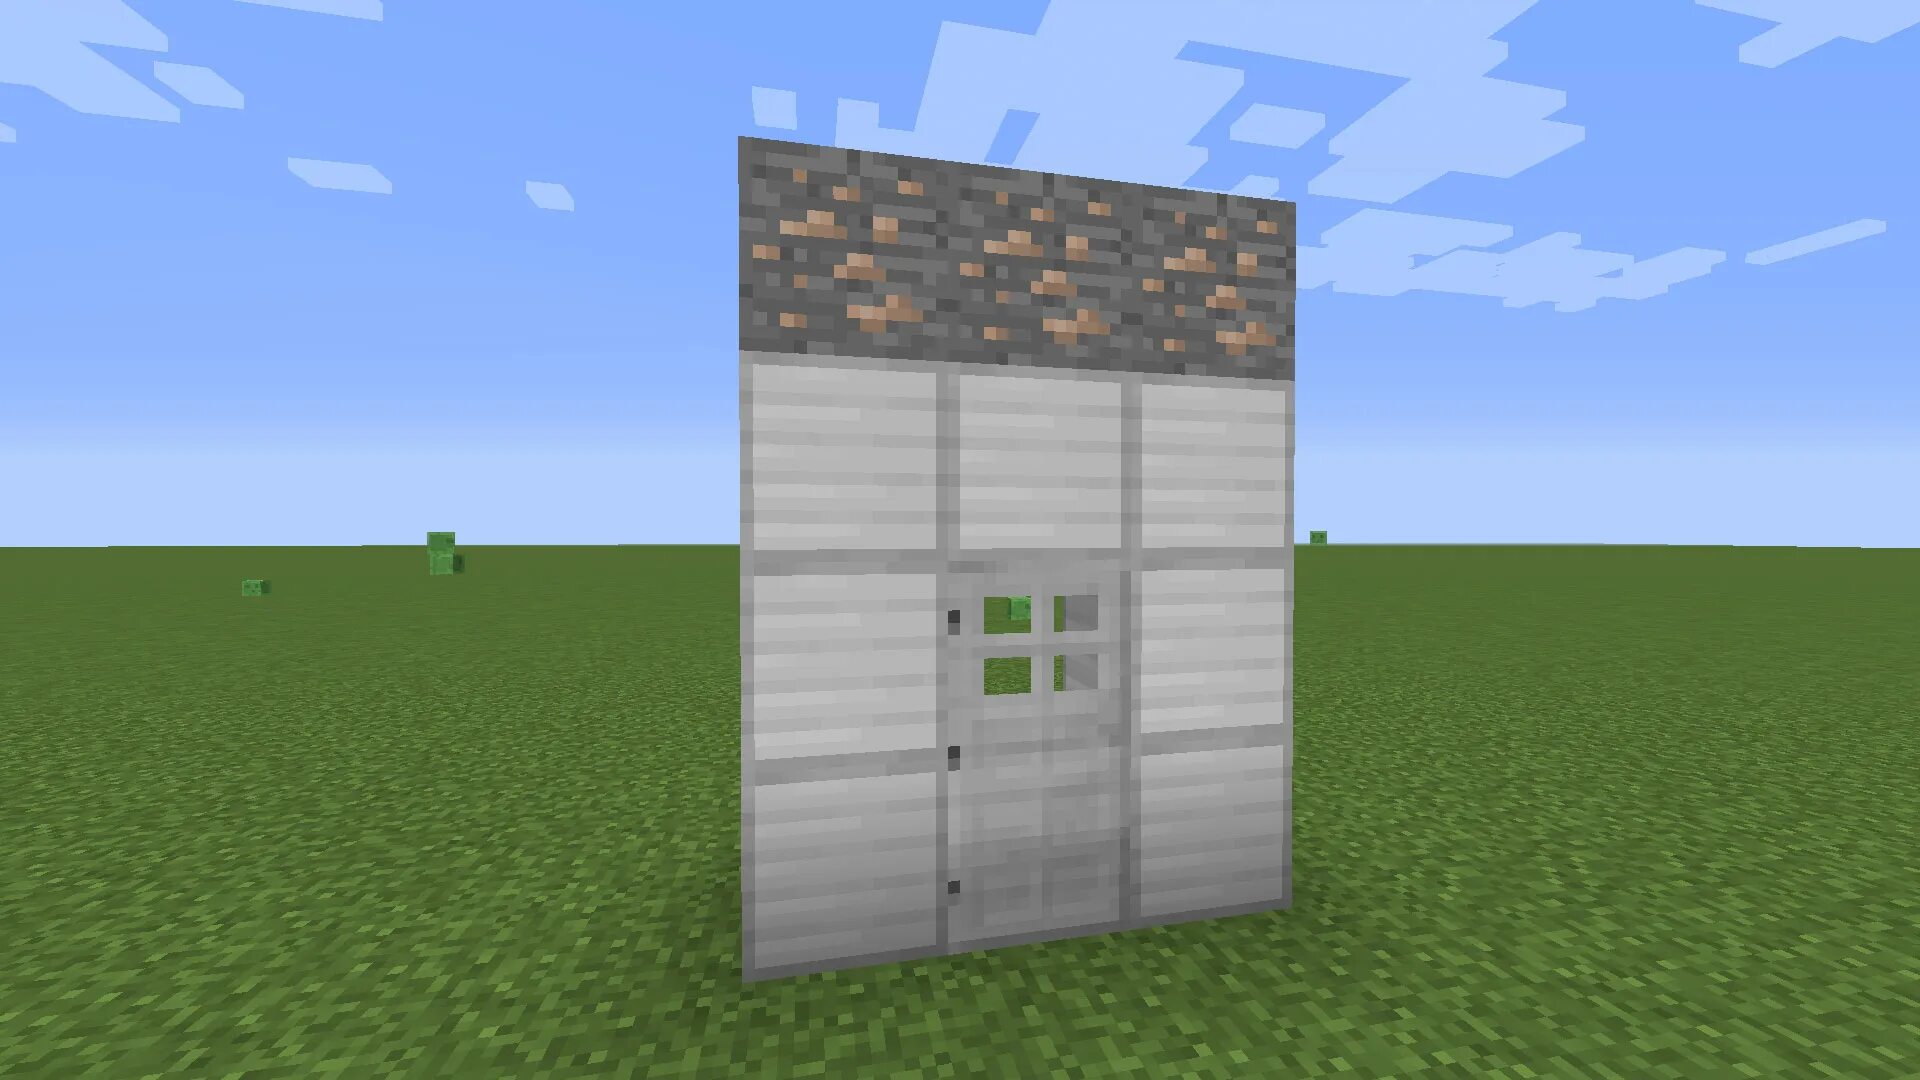 Двери майн. Железная дверь Minecraft. Дверь из МАЙНКРАФТА. Дверь майн постройка. Дверь в МАЙНКРАФТЕ постройка.